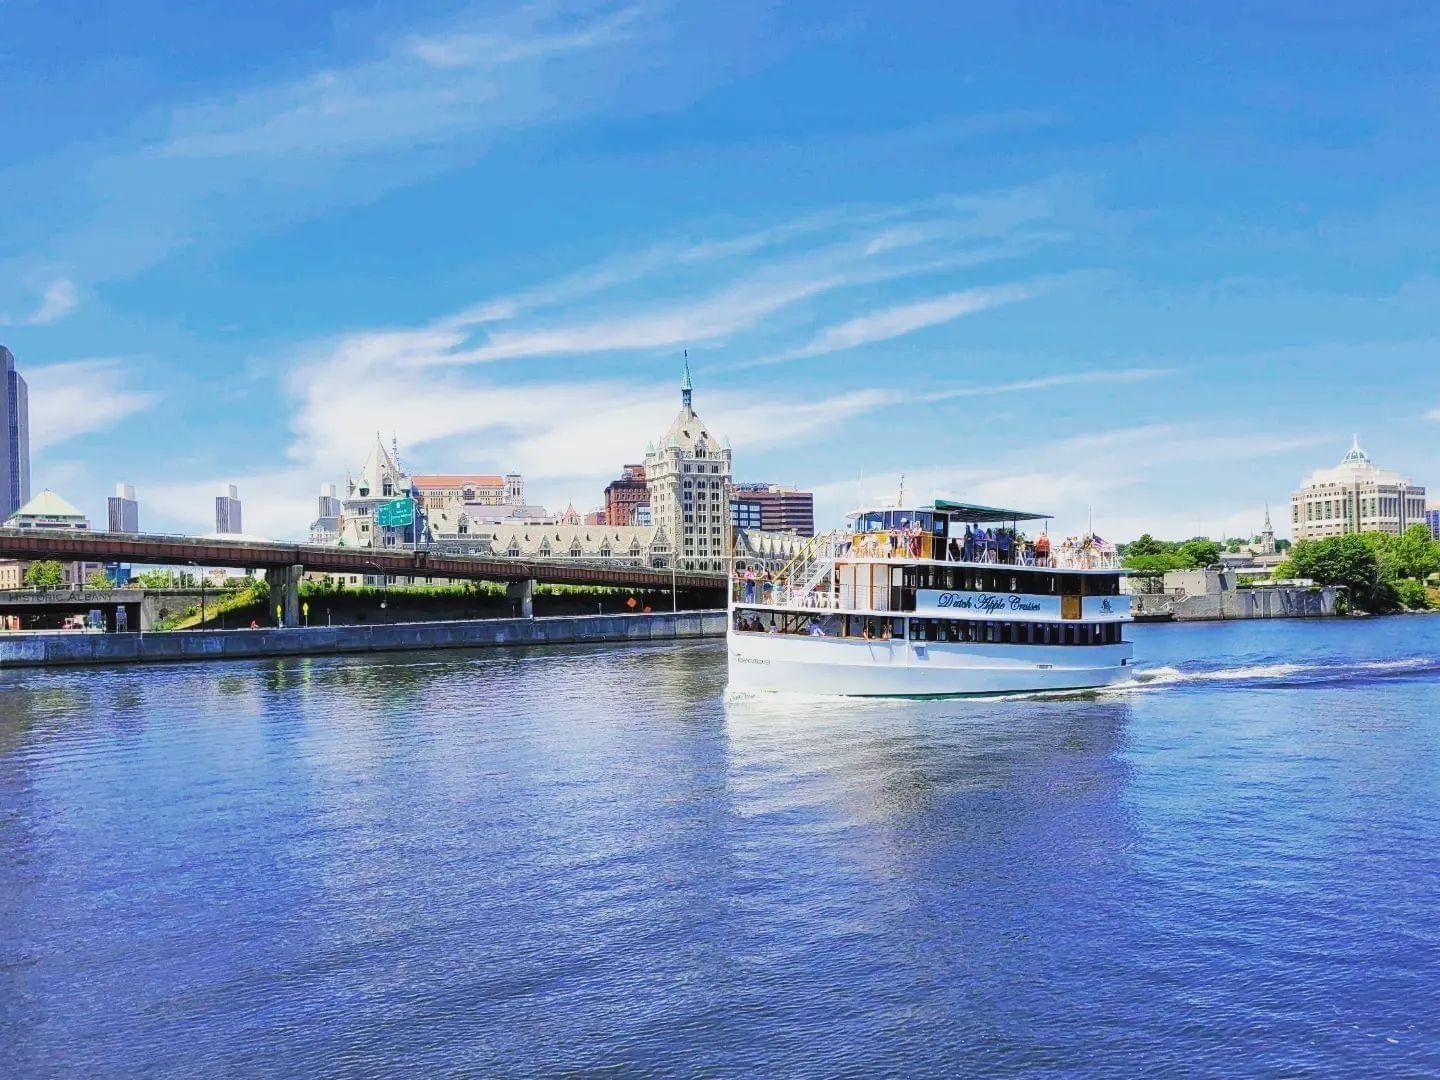 Dutch Apple Cruises Albany's Riverboat